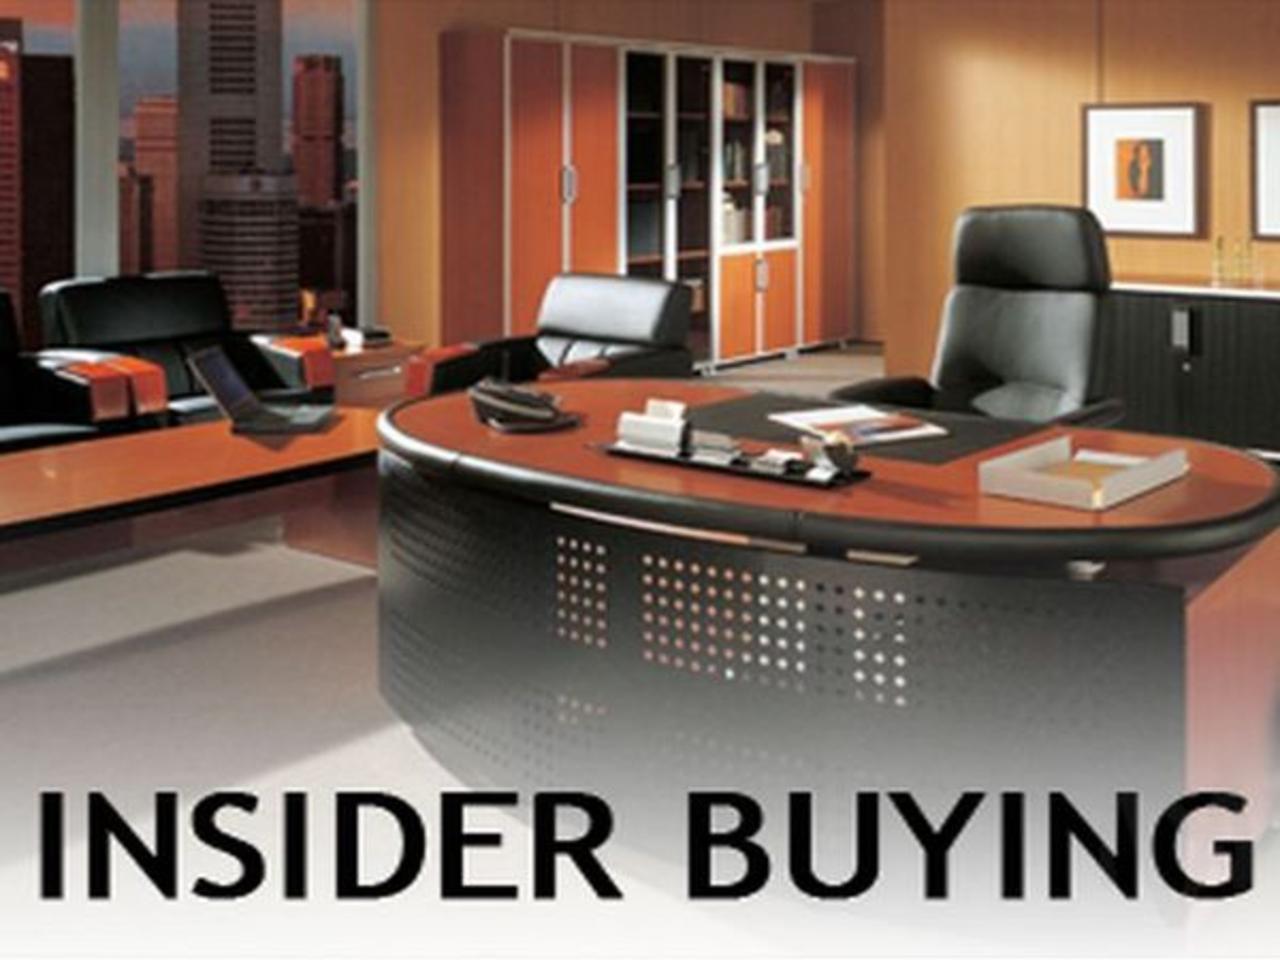 Friday 8/20 Insider Buying Report: RL, BRSP